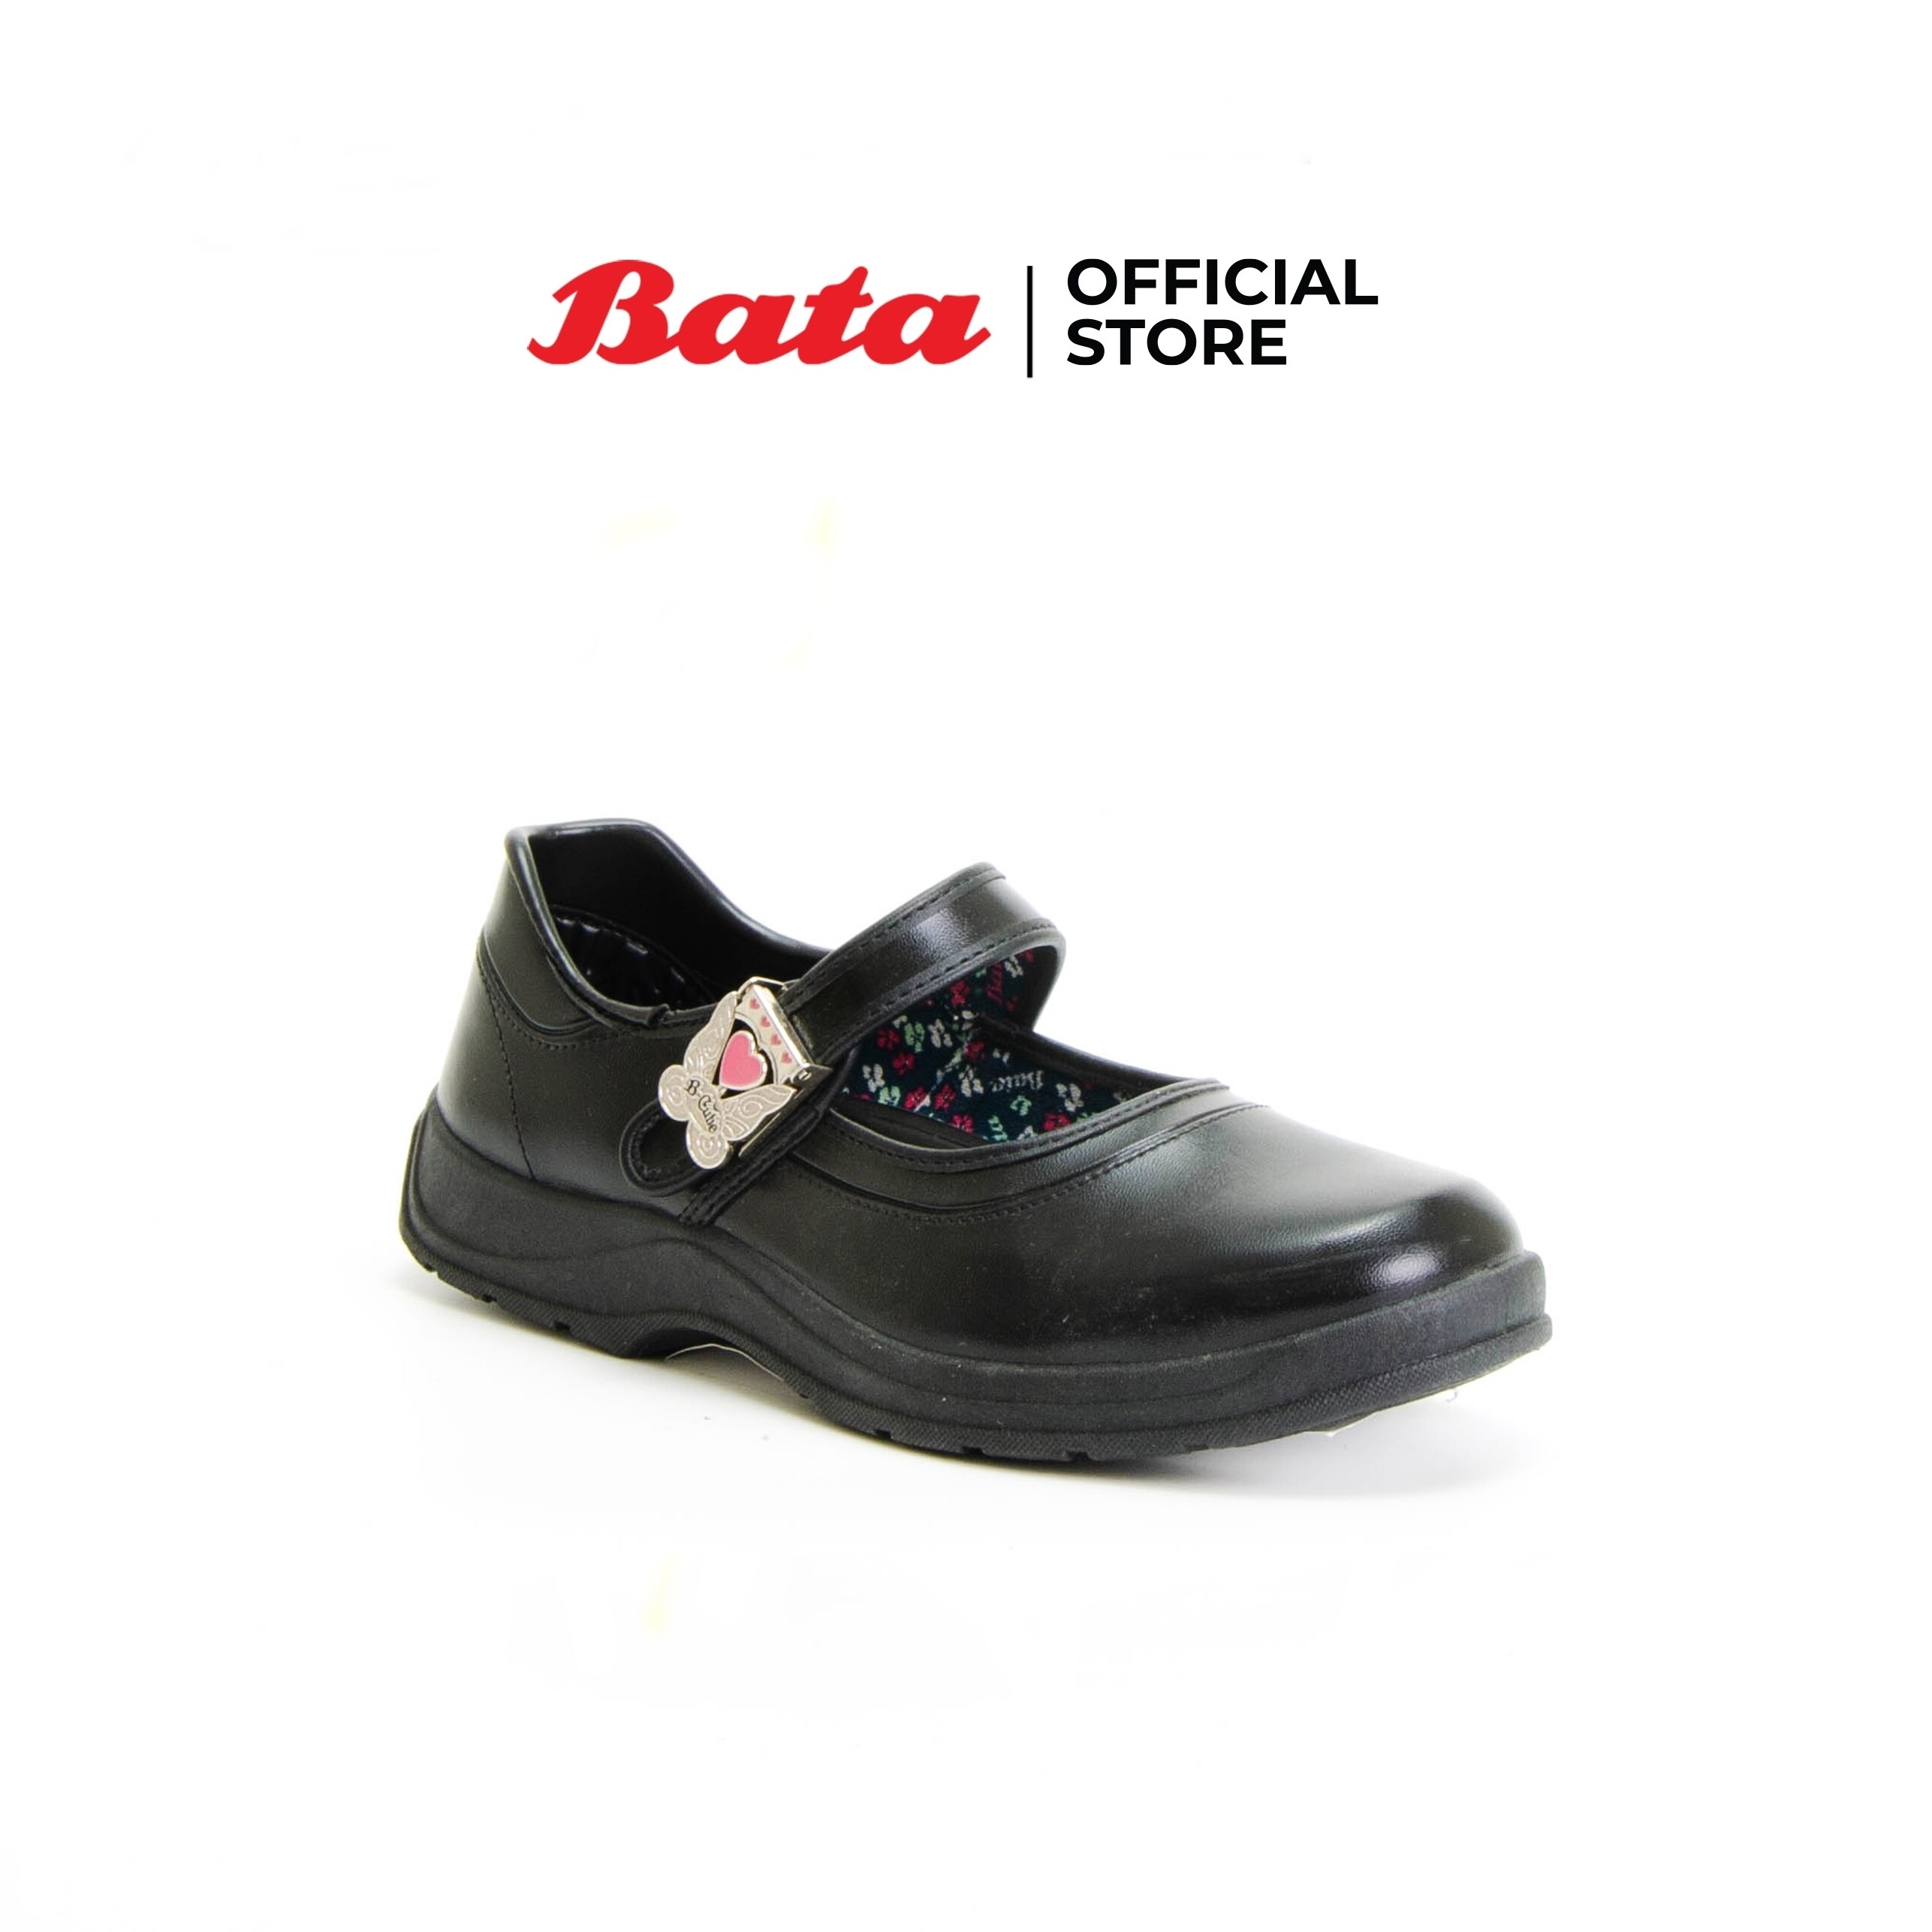 Bata รองเท้านักเรียนเด็กผู้หญิง สีดำ B-Cutie Butterfly antibac School- รหัส 3416195  / 4416195 สี Black ไซส์ EU 40 สี Blackไซส์ EU 40